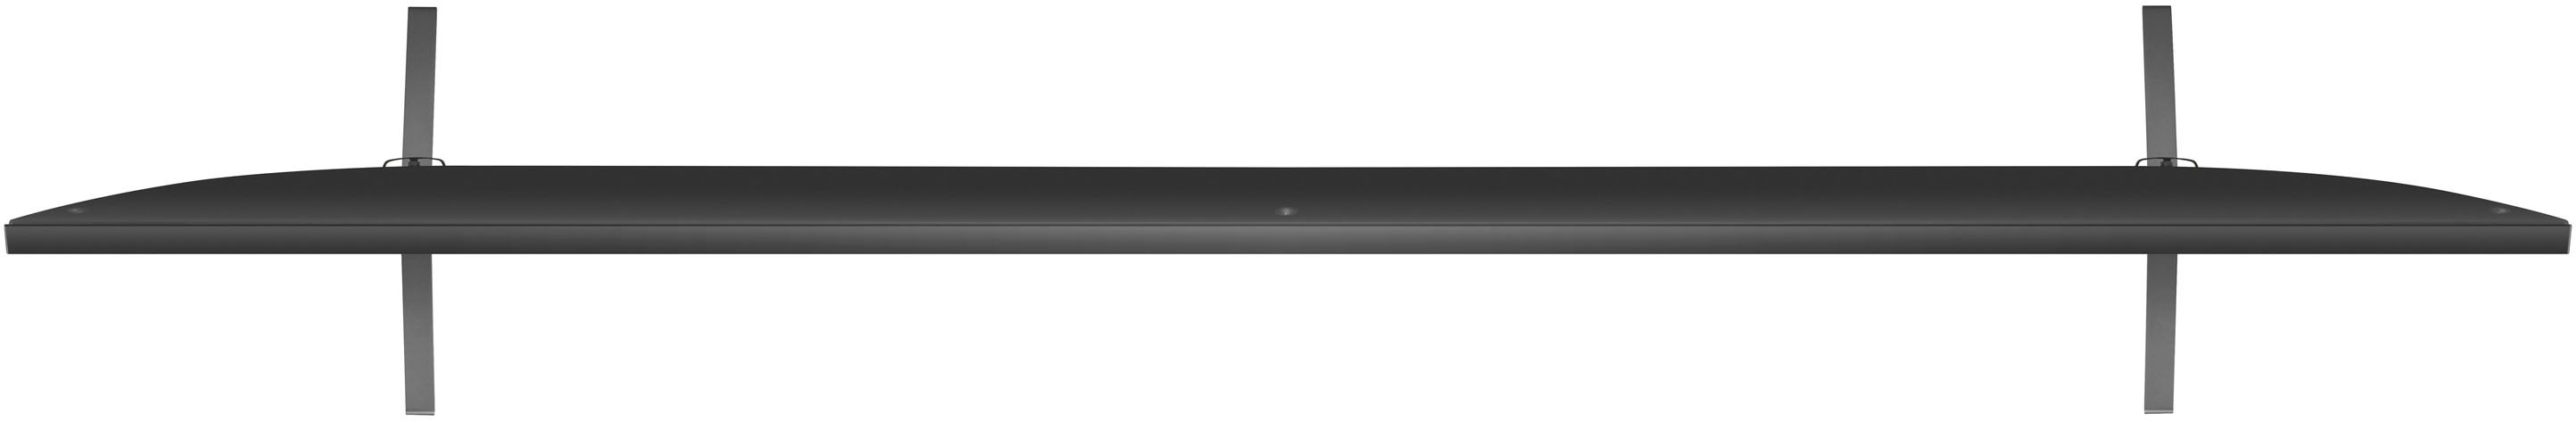 Best Buy: LG 75” Class UP8070 Series LED 4K UHD Smart webOS TV 75UP8070PUA